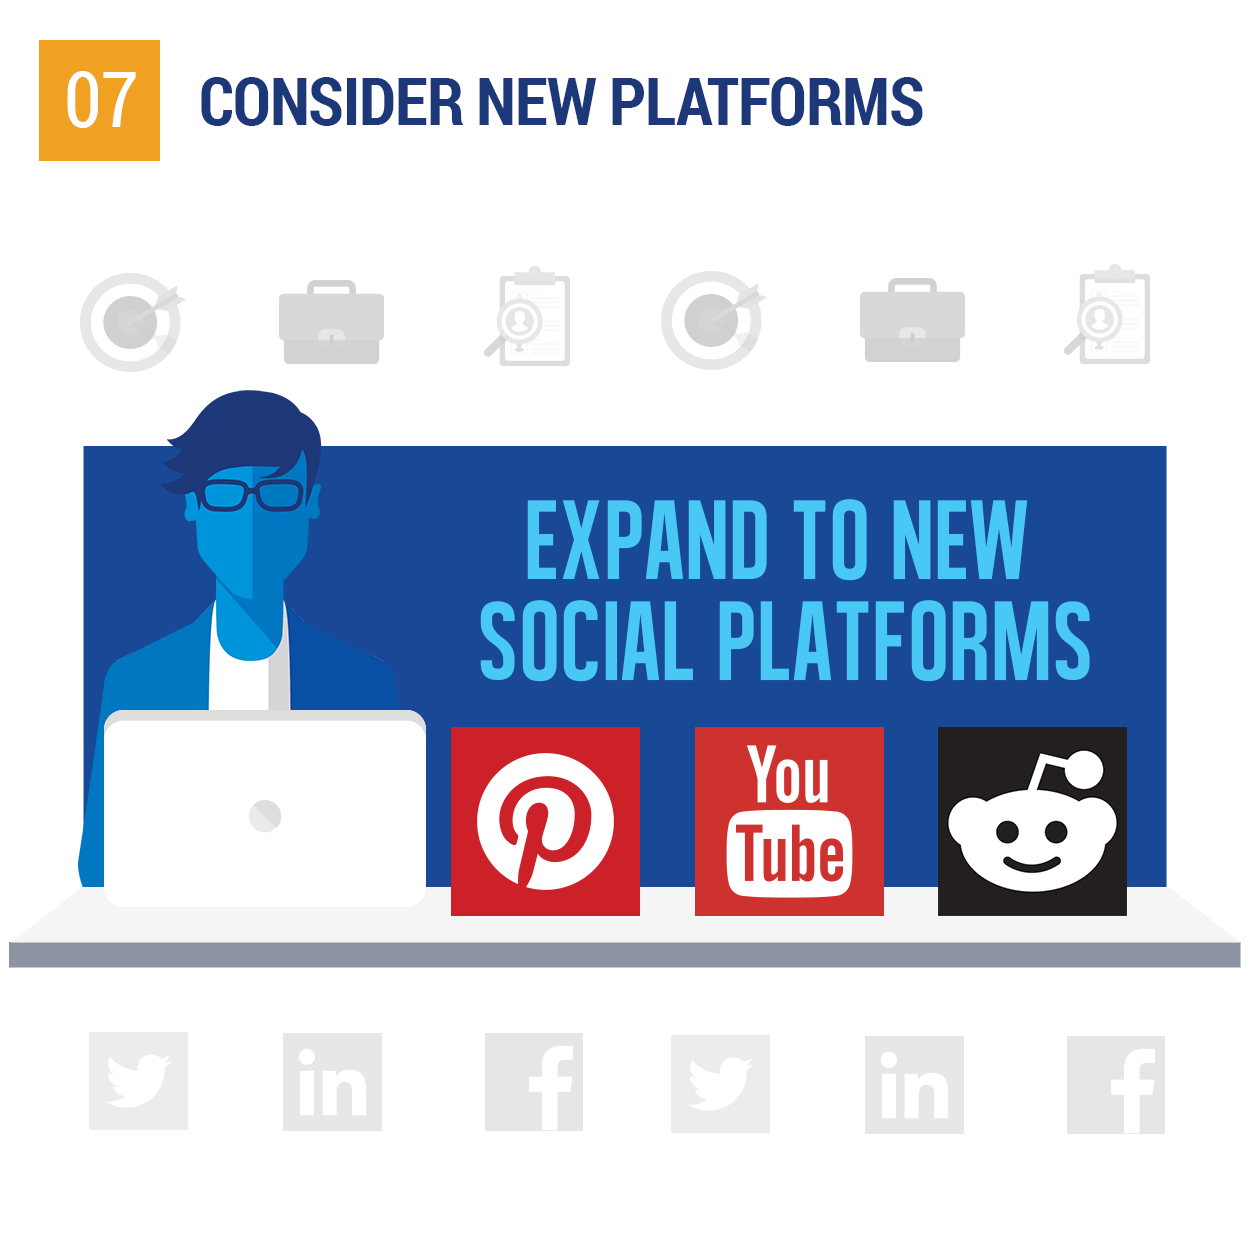 Consider new platforms